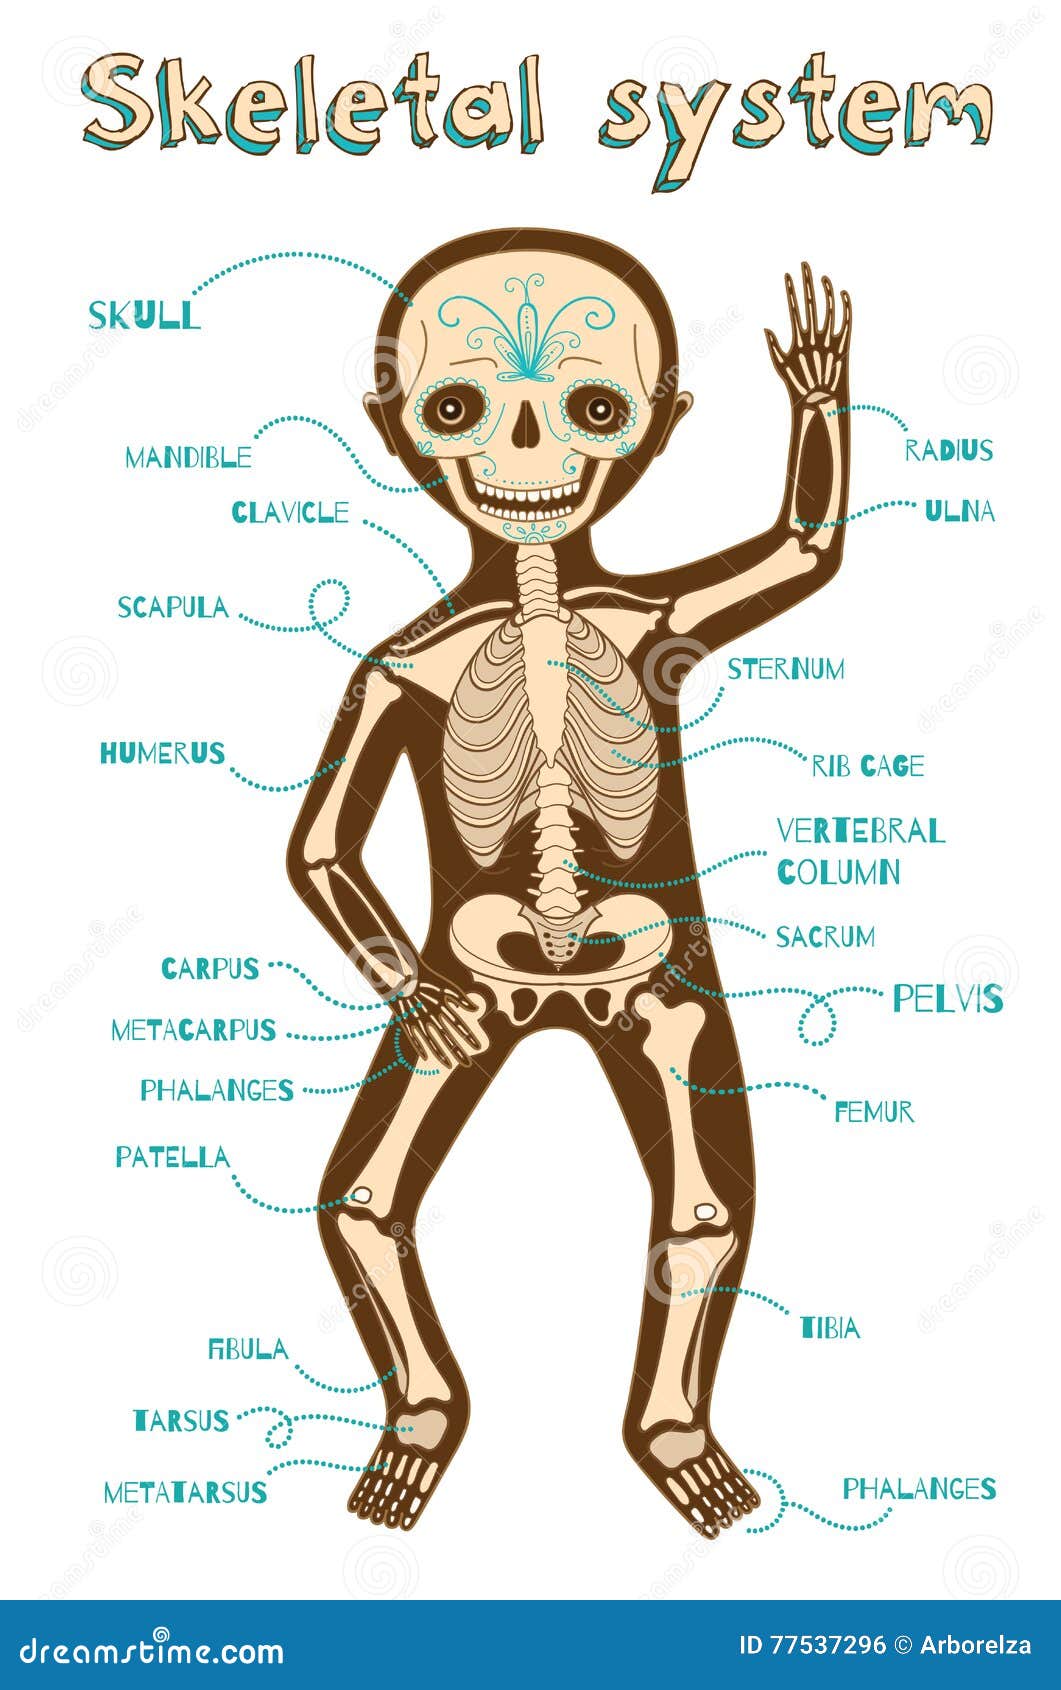 human skeleton diagram / how to draw human skeleton drawing easy - YouTube